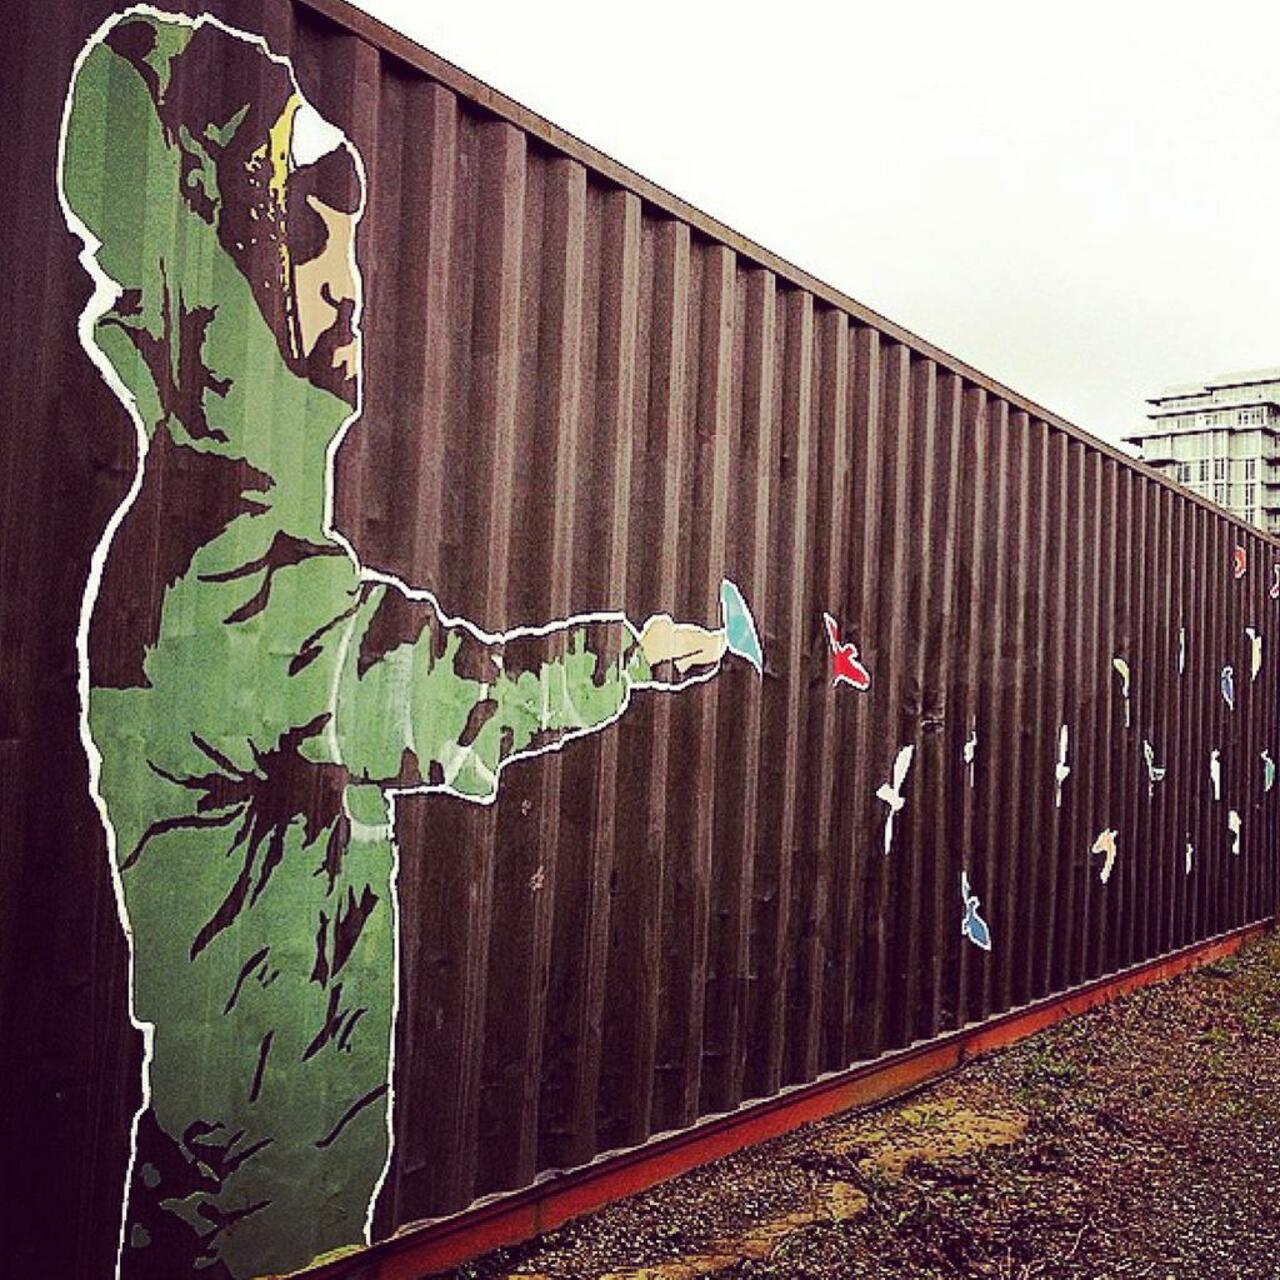 #stencil #sprayart #streetart #graffiti #urbanart #murales #mural http://t.co/QrpKMCSbbx